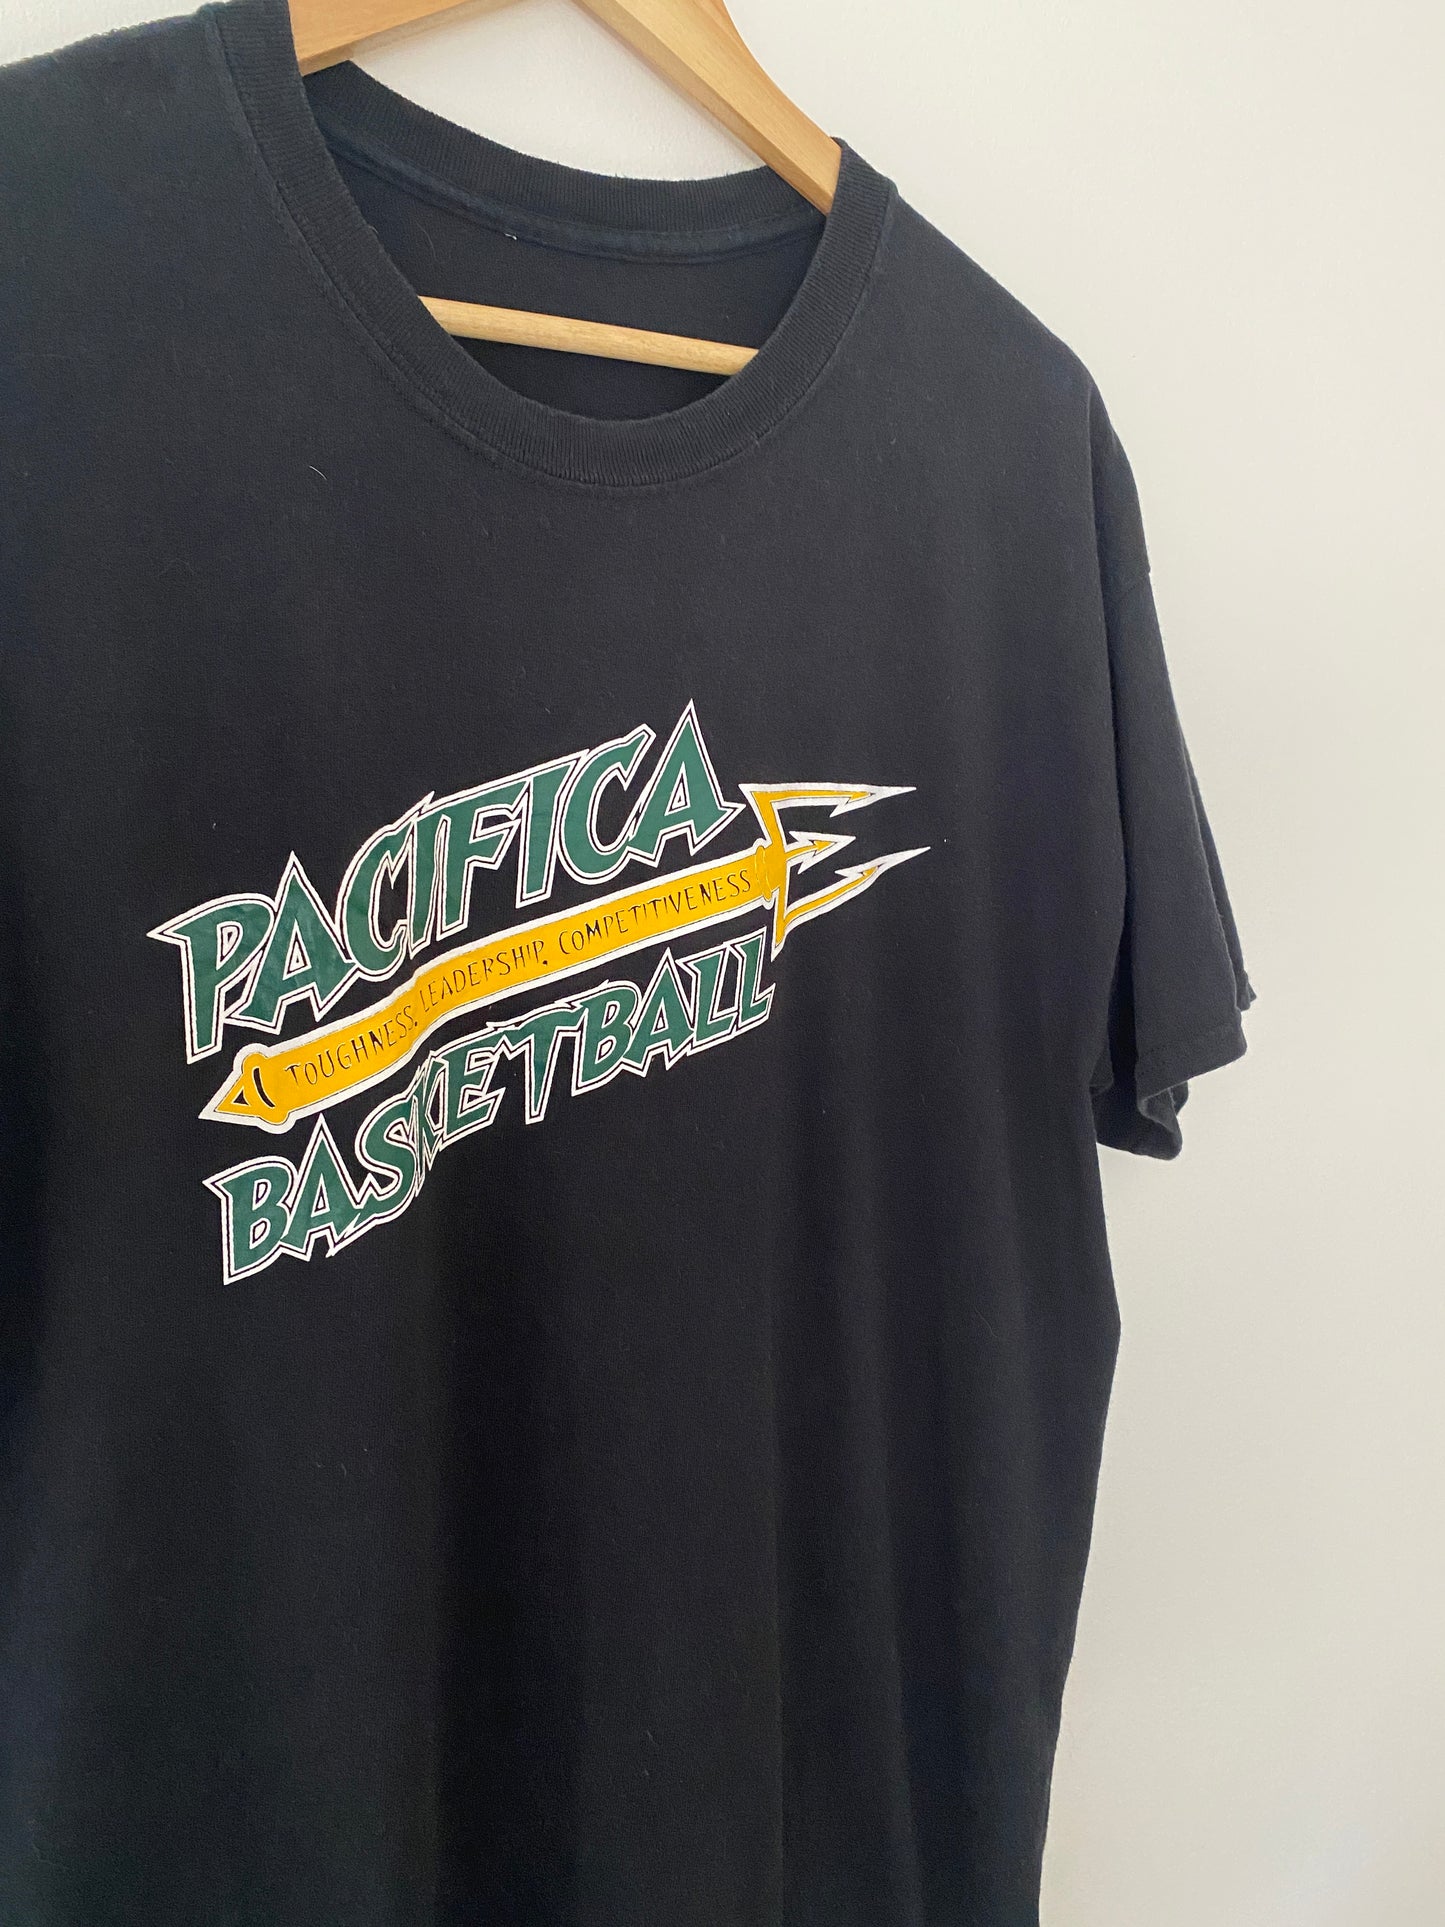 Pacifica Tritons Basketball T-Shirt - L